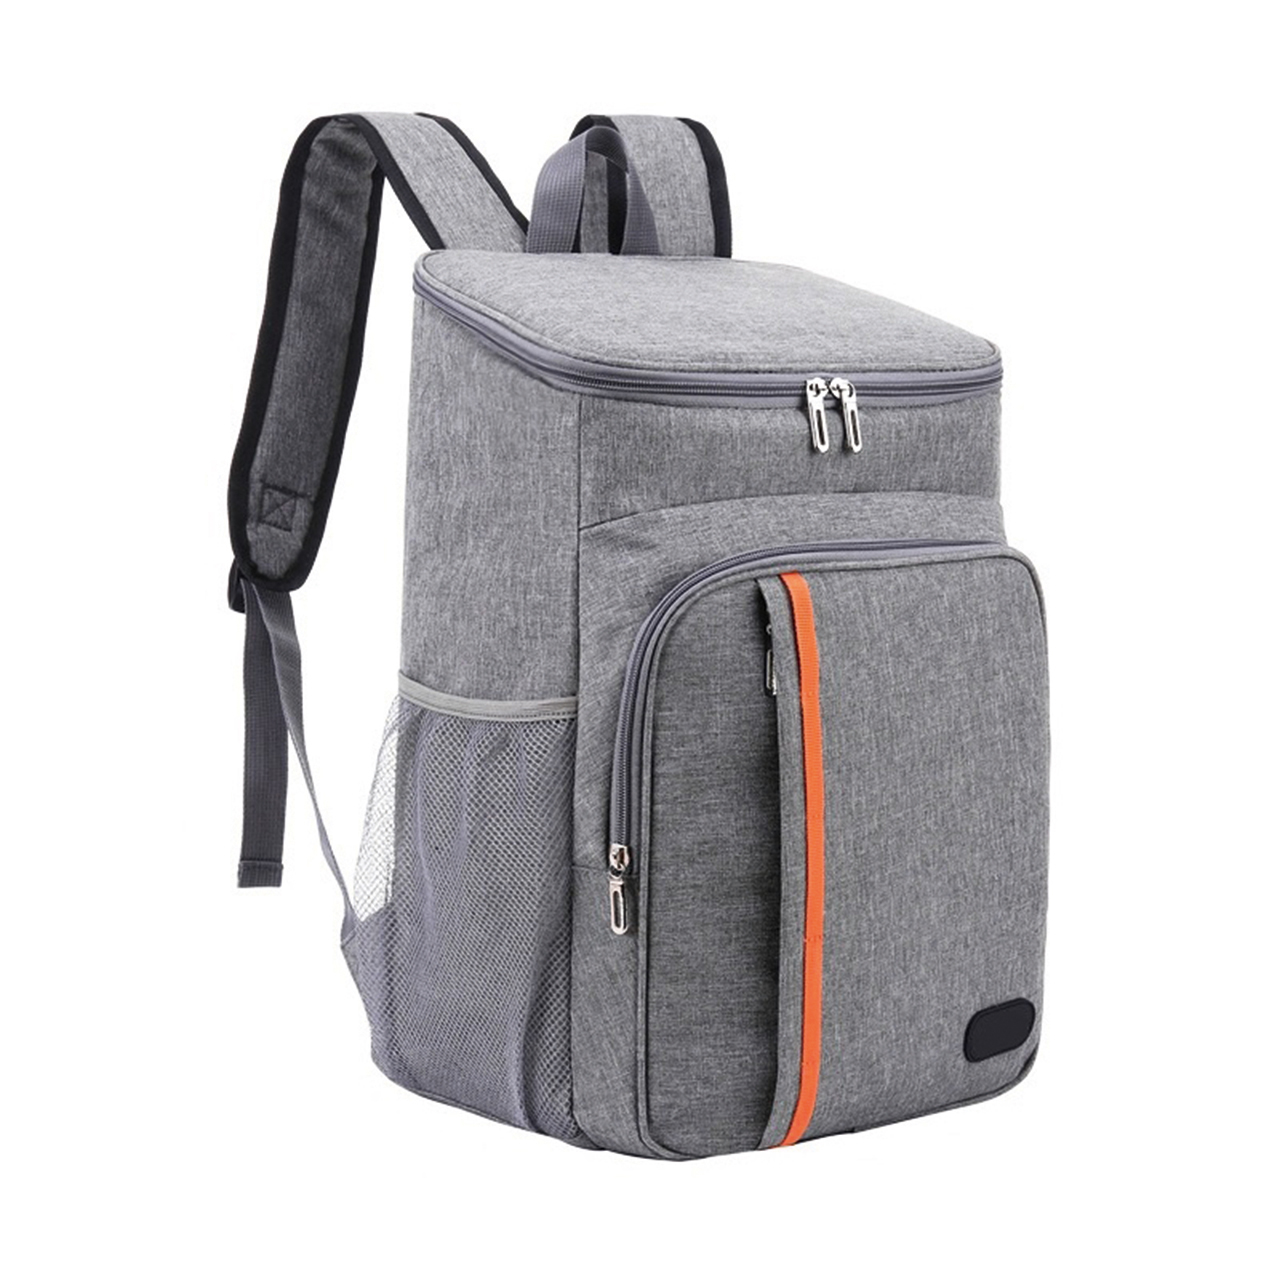 20L Insulated Backpack | Expert Verdict